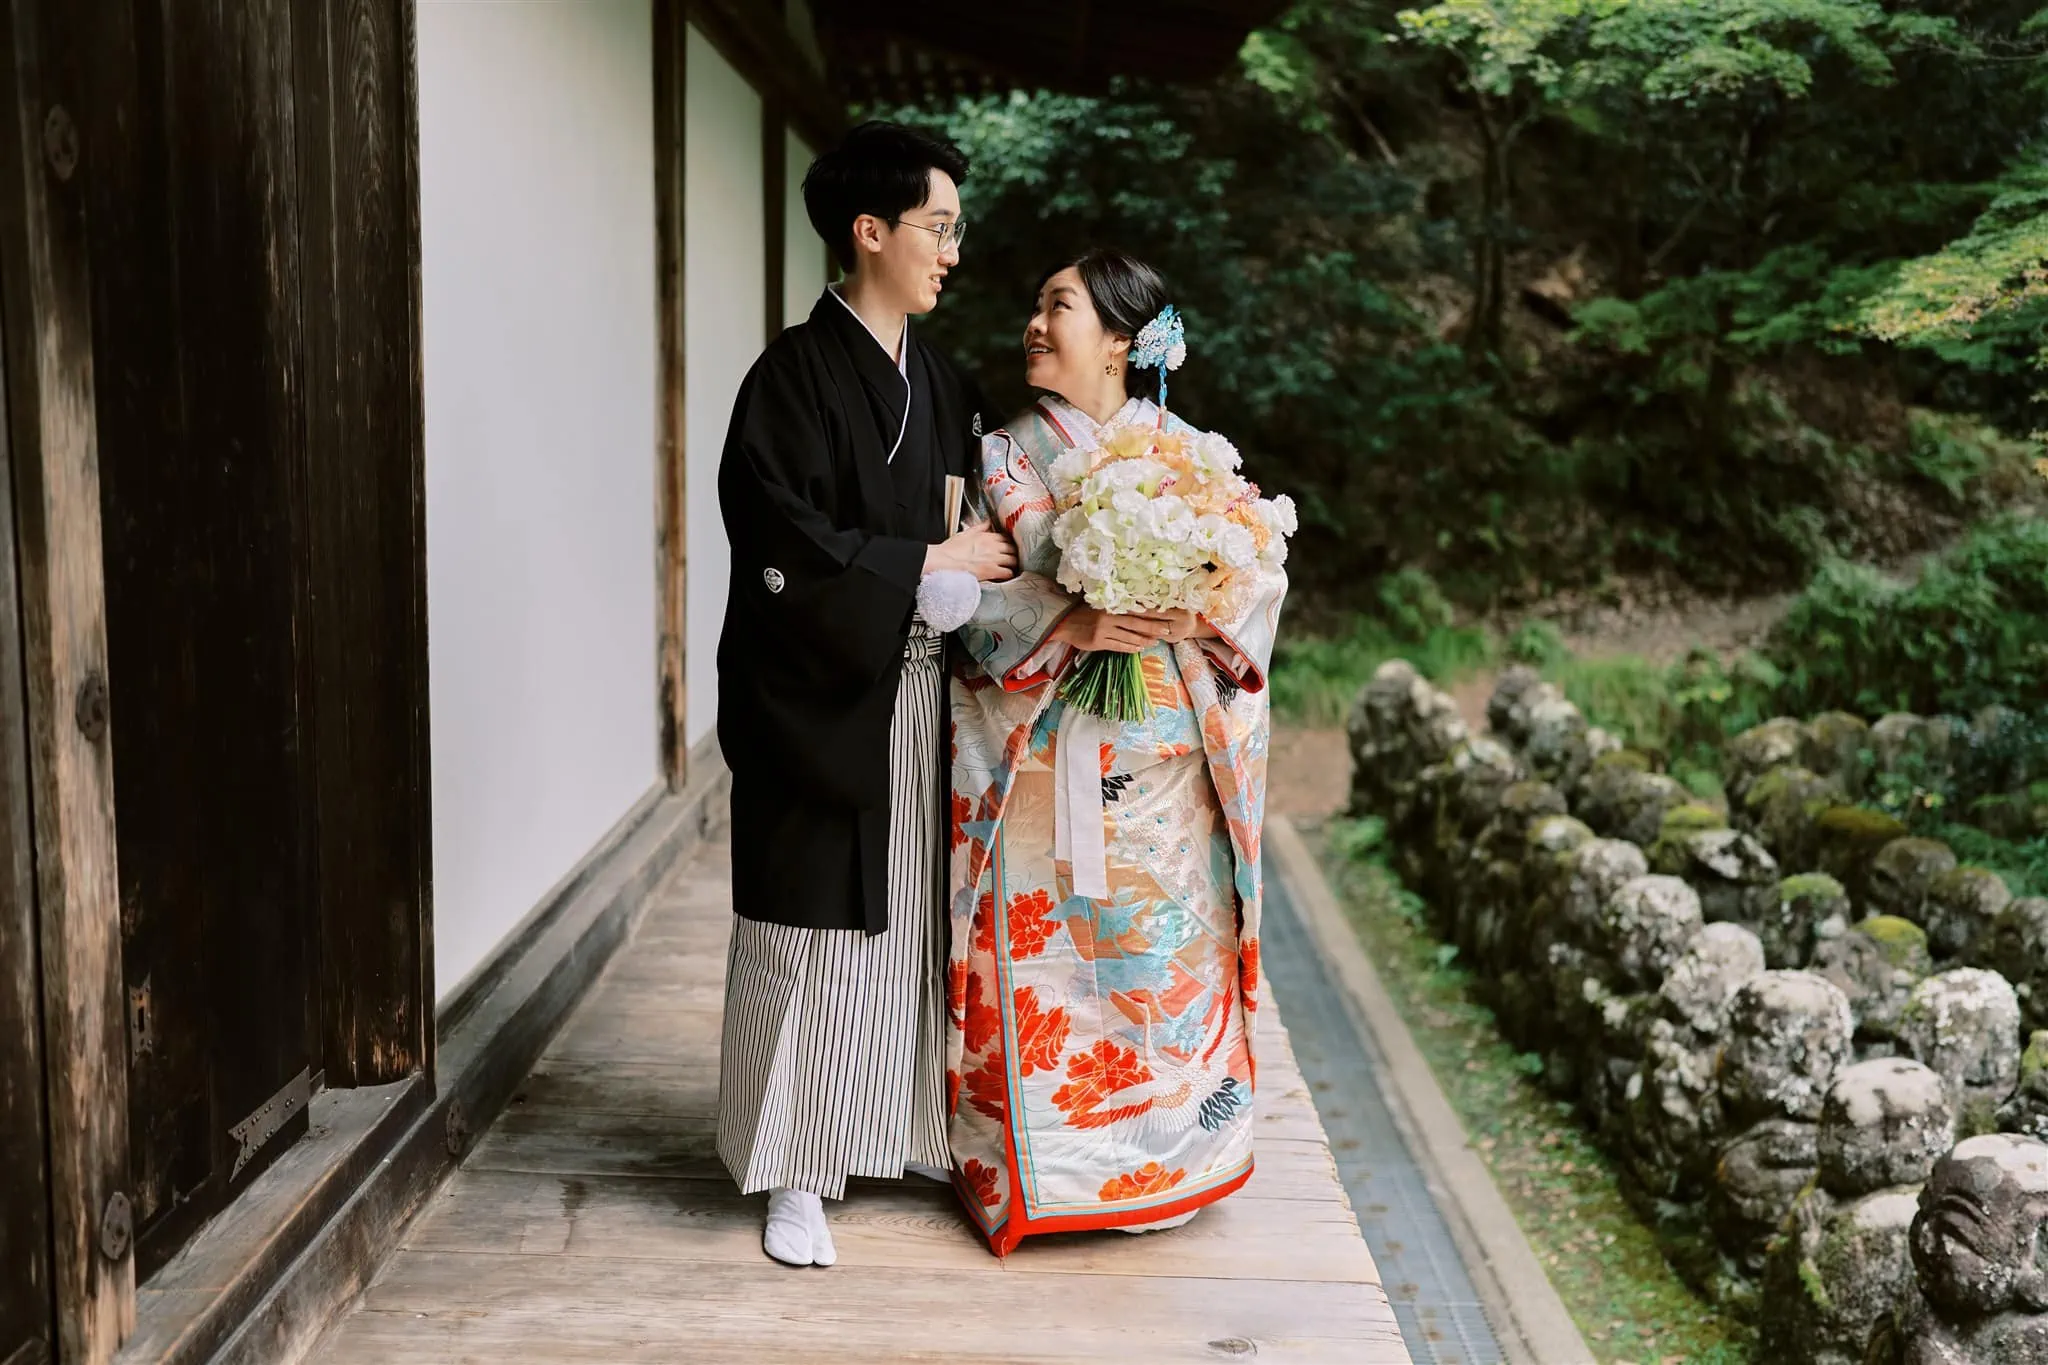 Kyoto Tokyo Japan Elopement Wedding Photographer, Planner & Videographer | A bride and groom captured by an elopement photographer in traditional Japanese kimono.